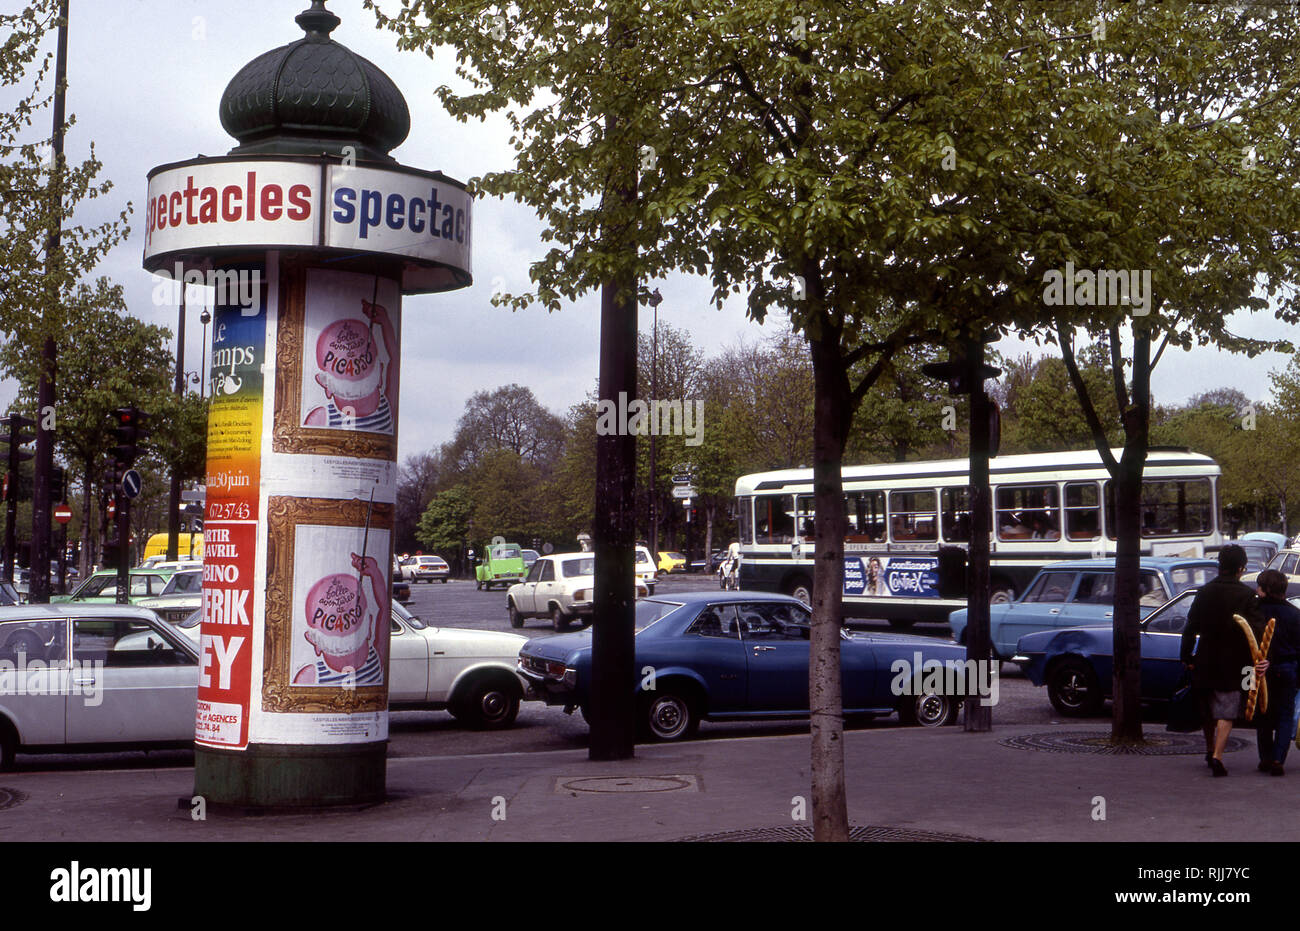 Street scene with advertising kiosk in Paris, France circa 1970s Stock Photo